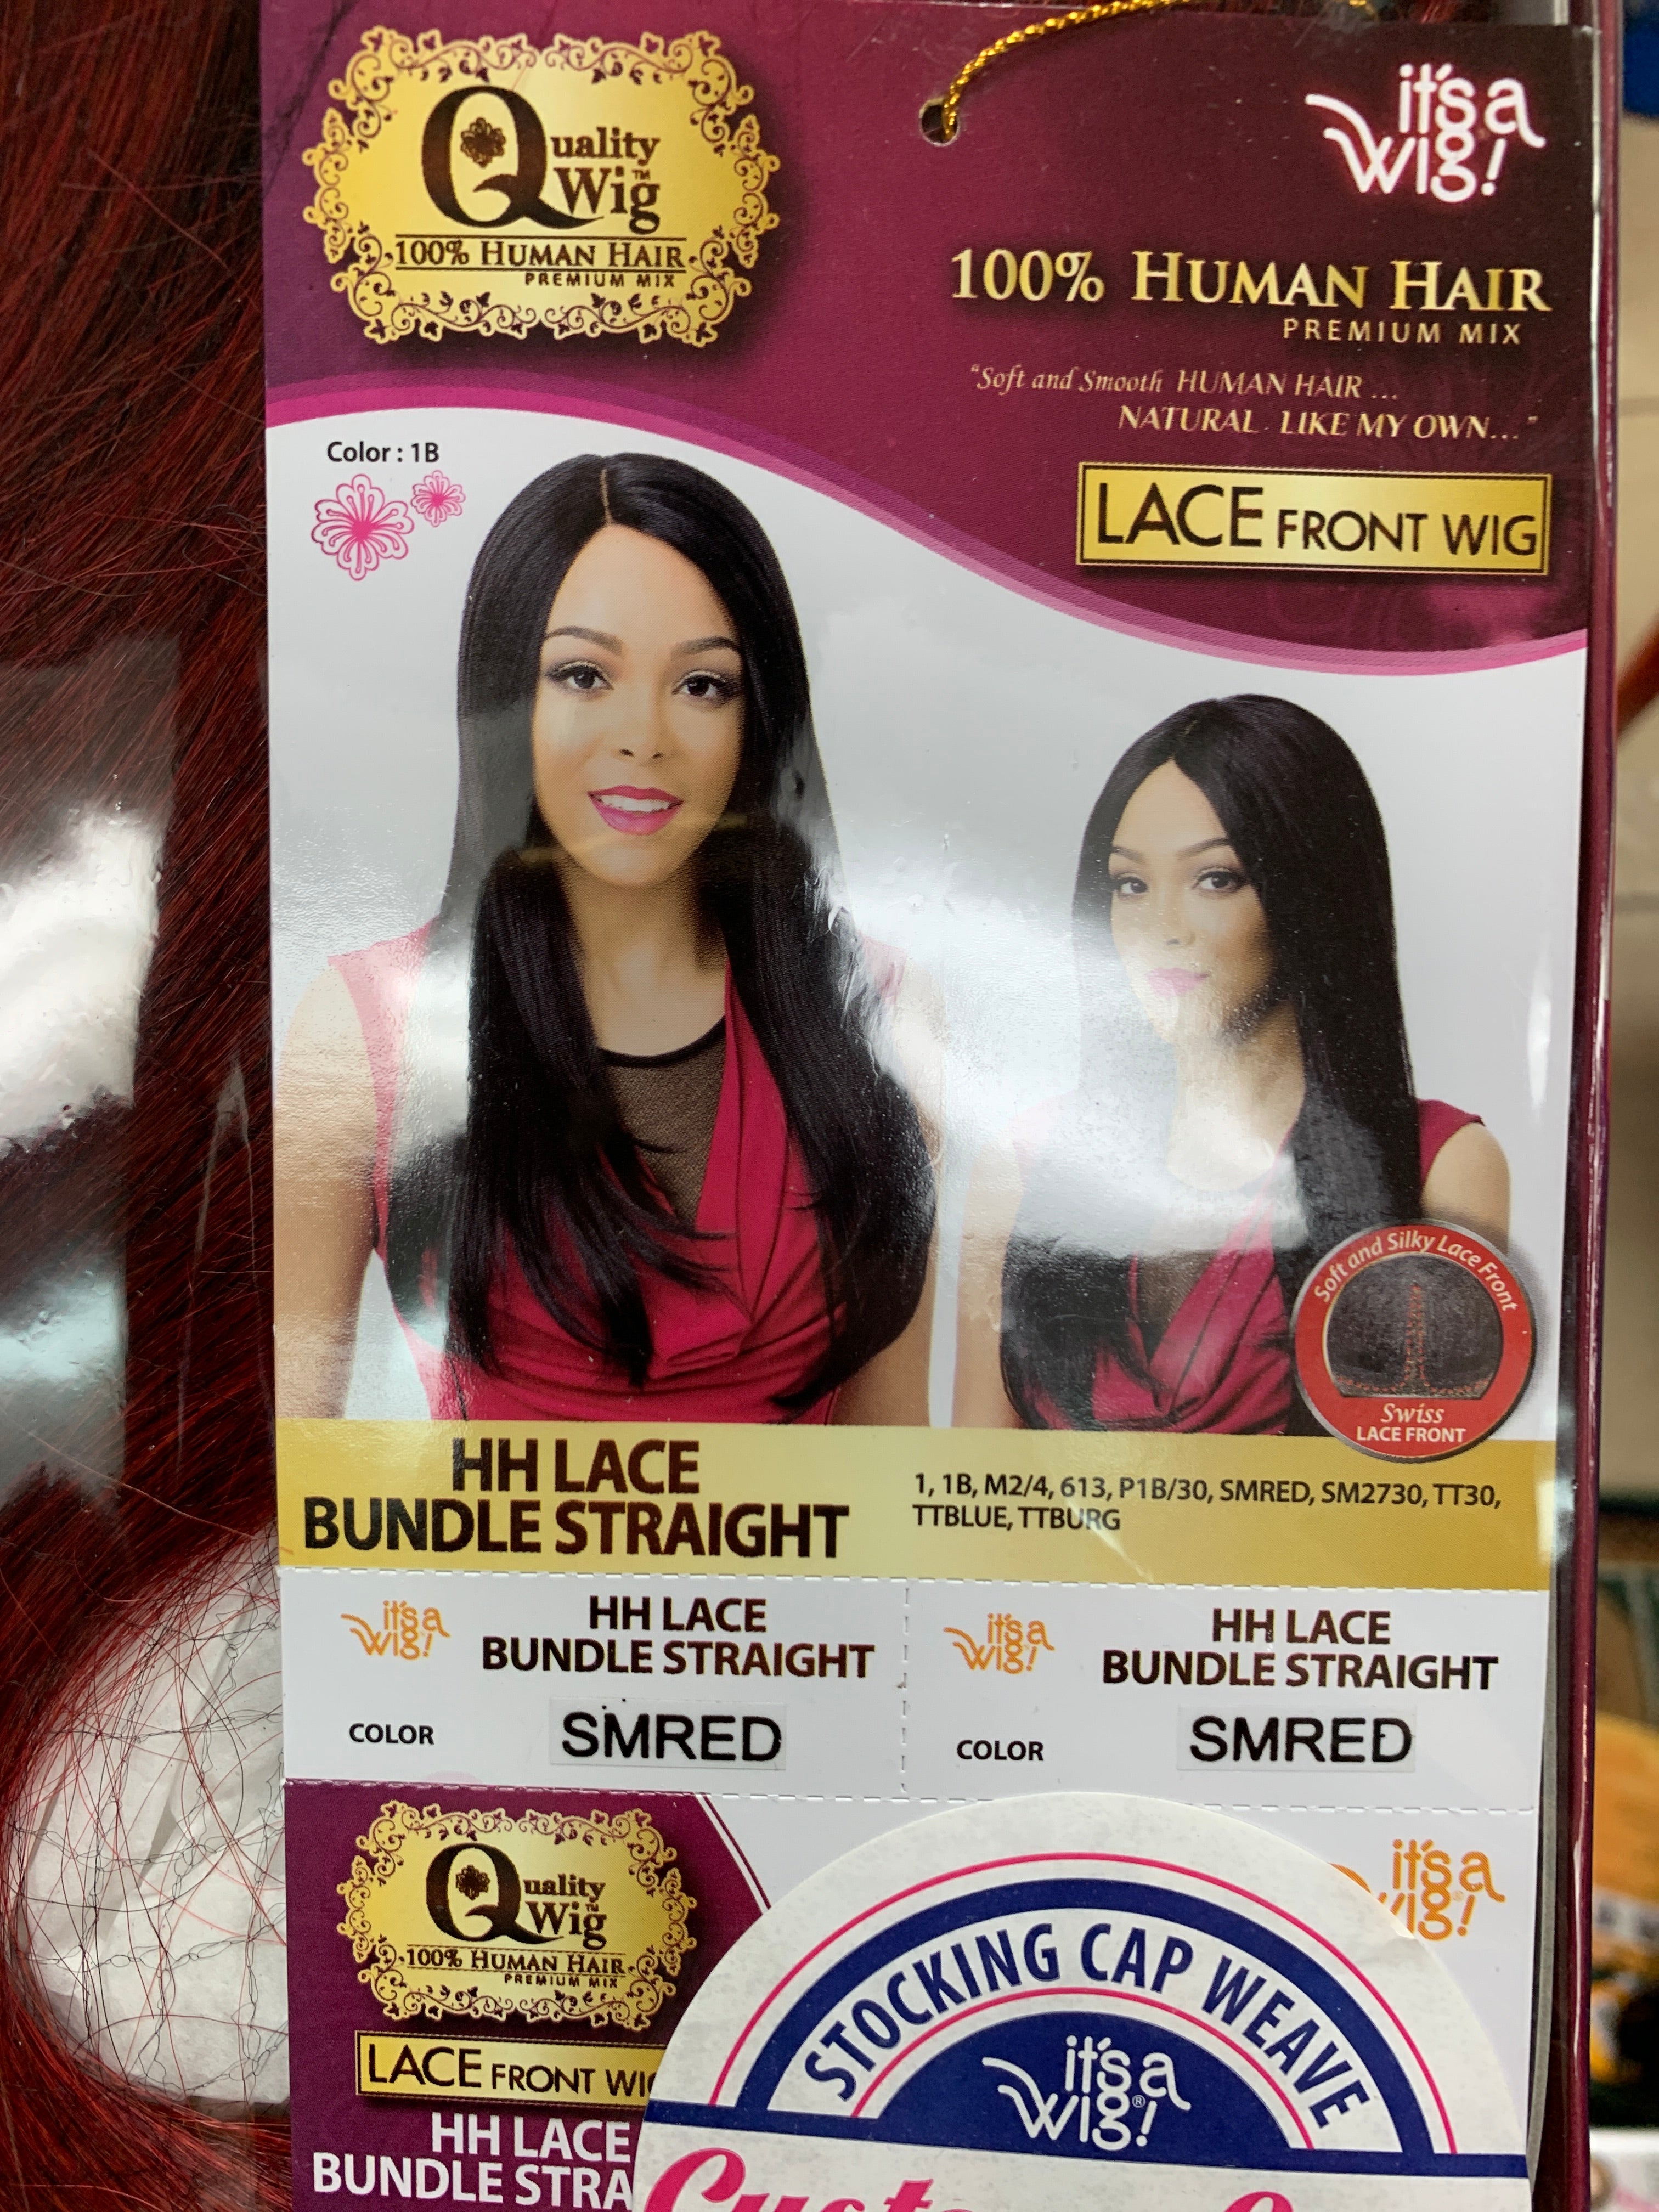 It’s a wig Hh lace bundle straight